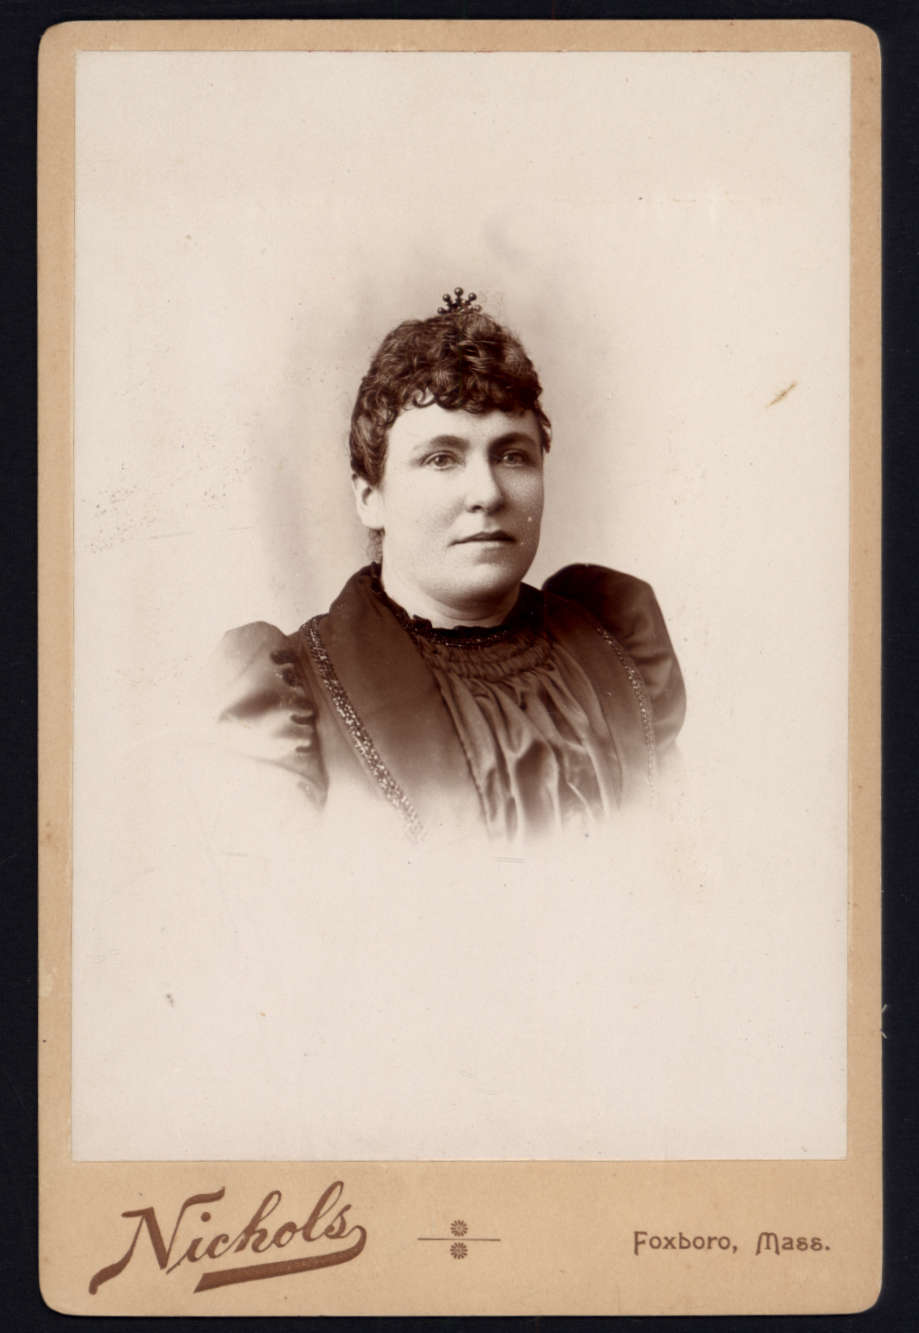 CABINET CARD studio NICHOLS Foxboro MASS. * WOMAN curly hair portrait no name